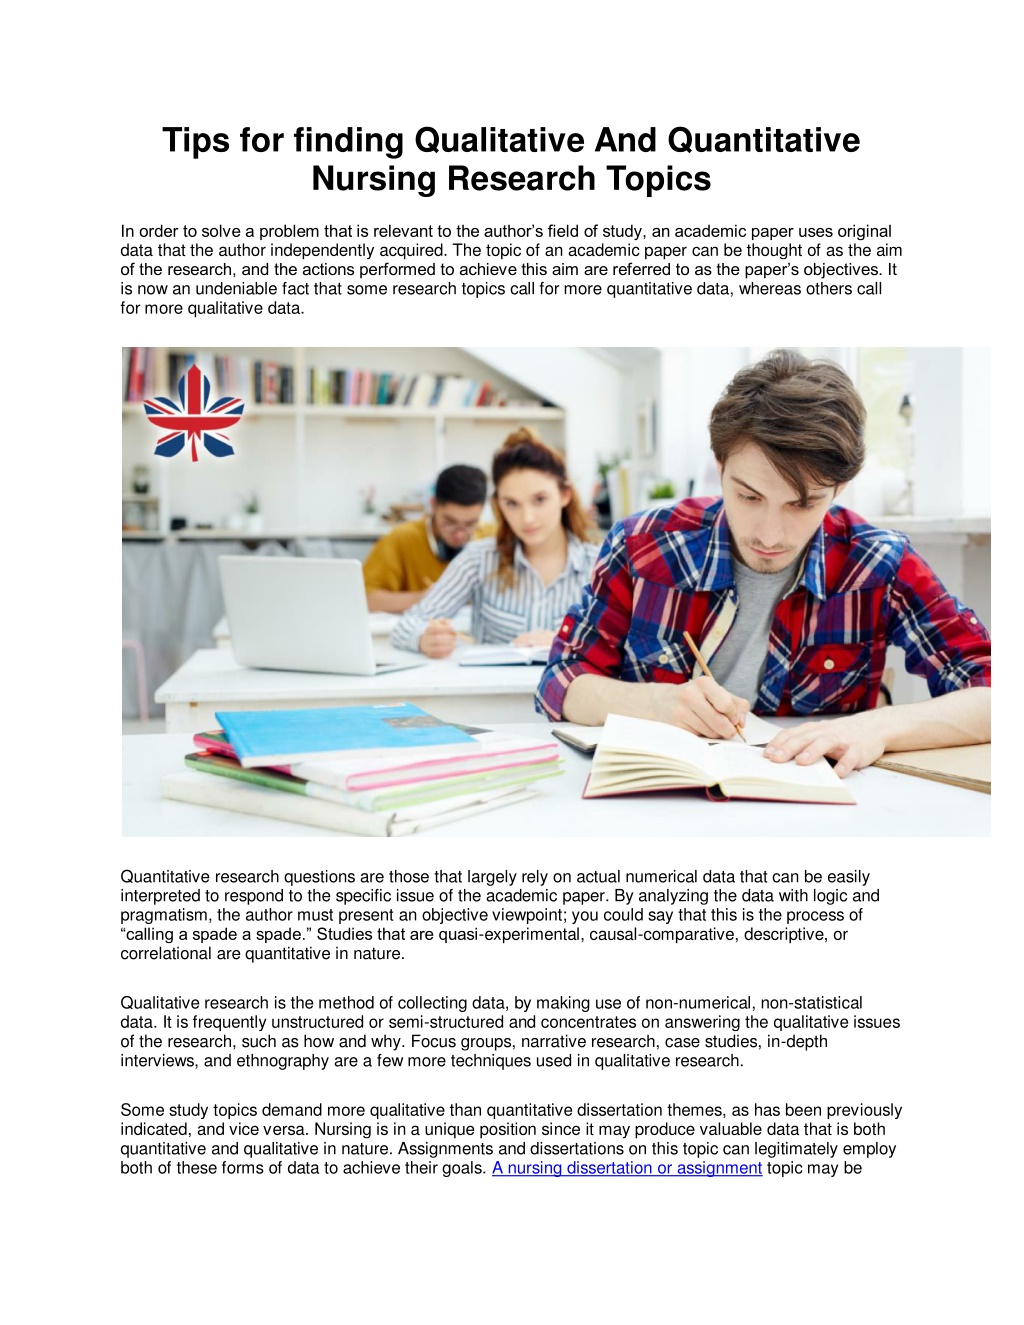 quantitative nursing research articles